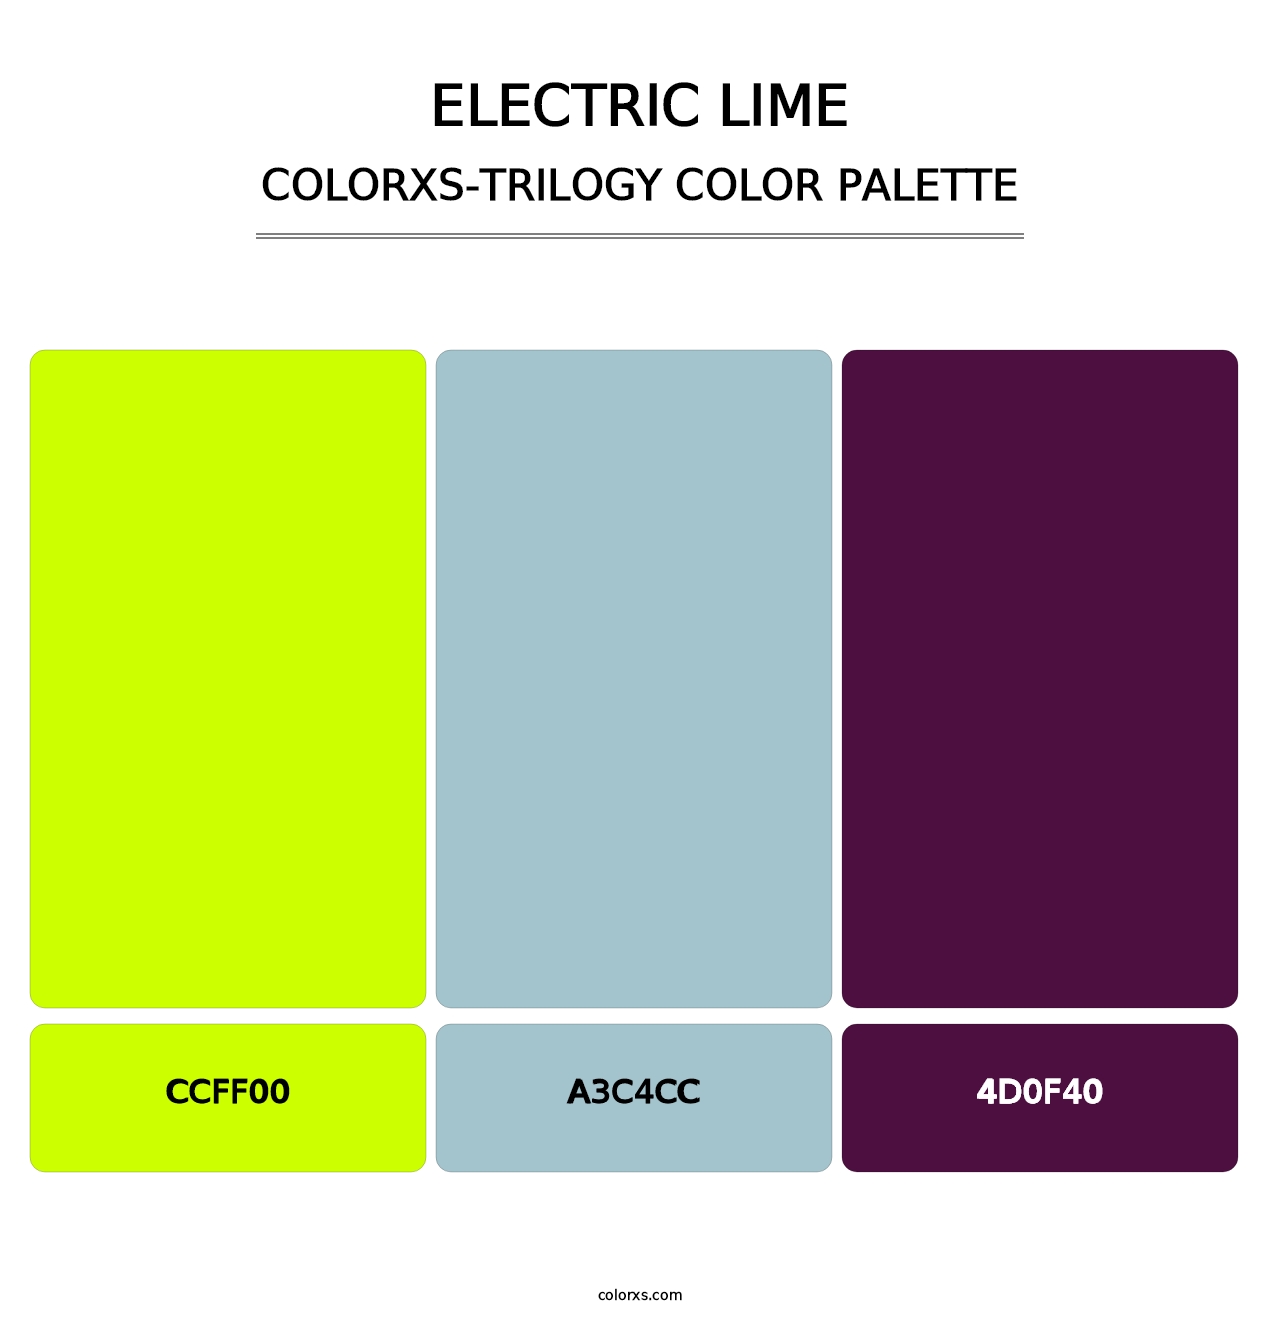 Electric Lime - Colorxs Trilogy Palette